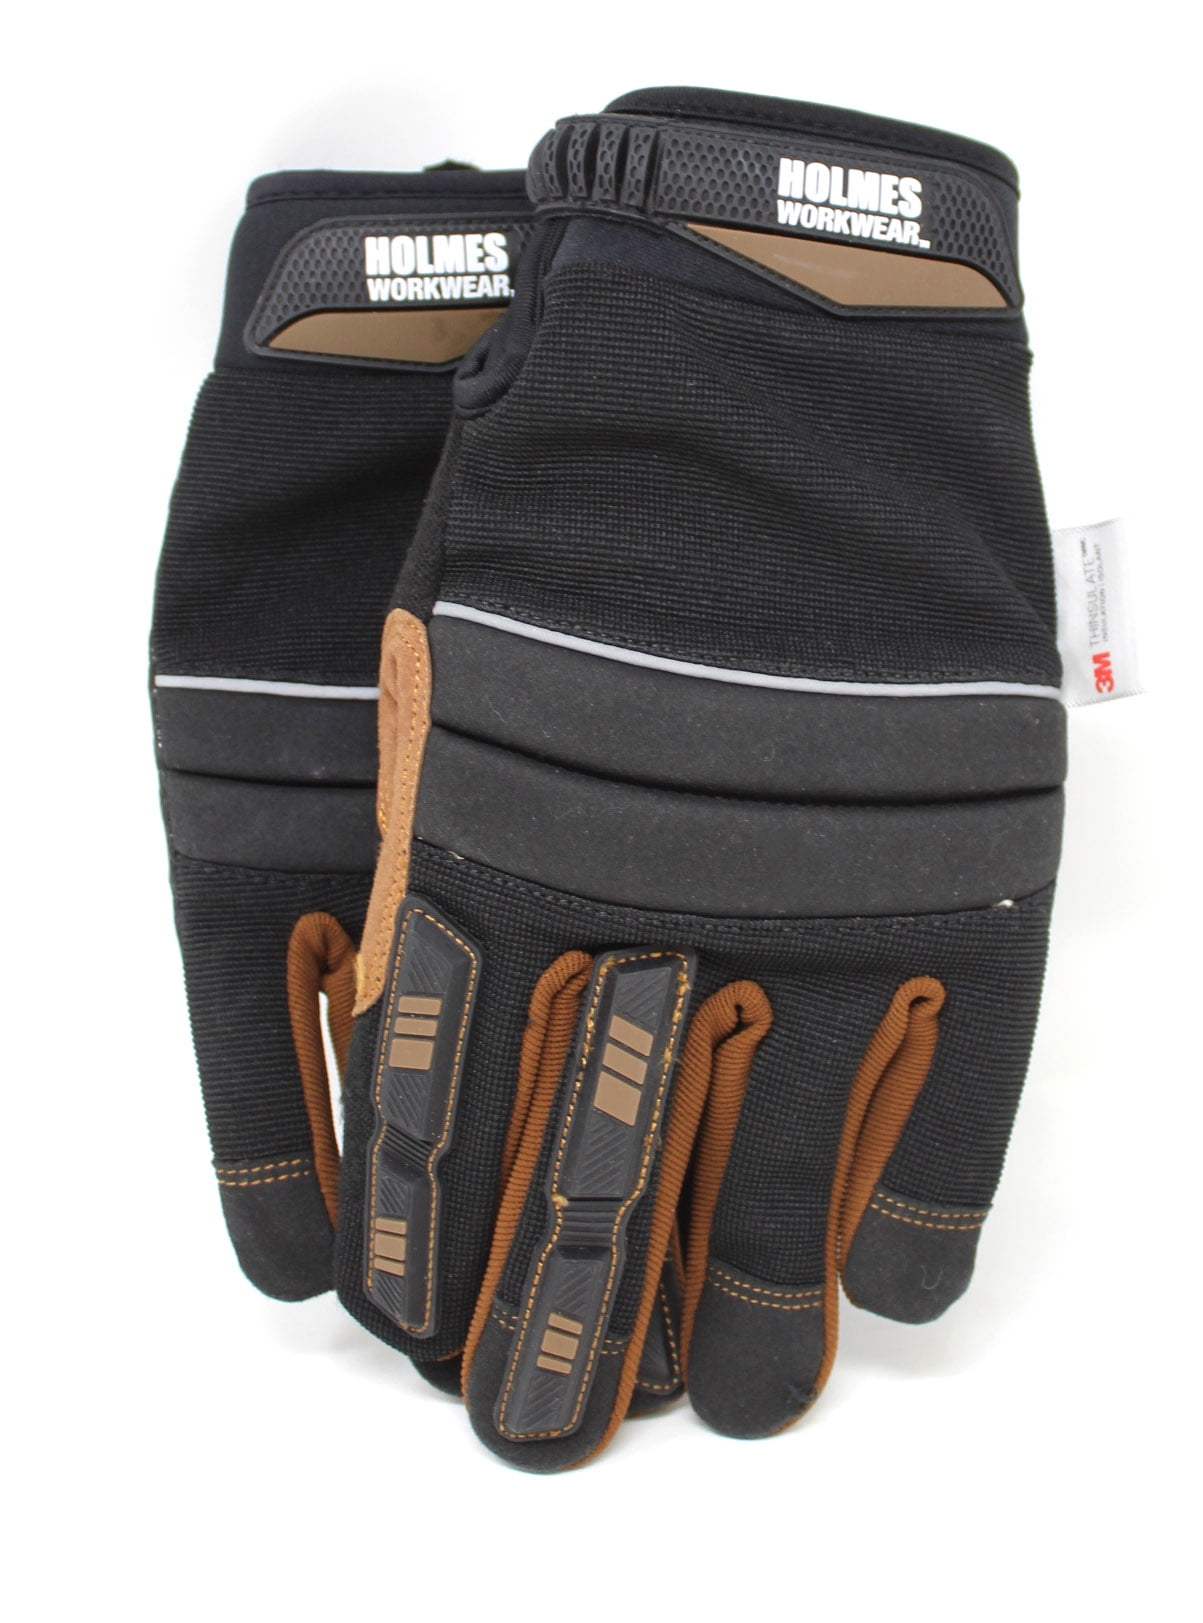 2-PackHABIT Insulated Waterproof Multi-Purpose GlovesSize M Medium 